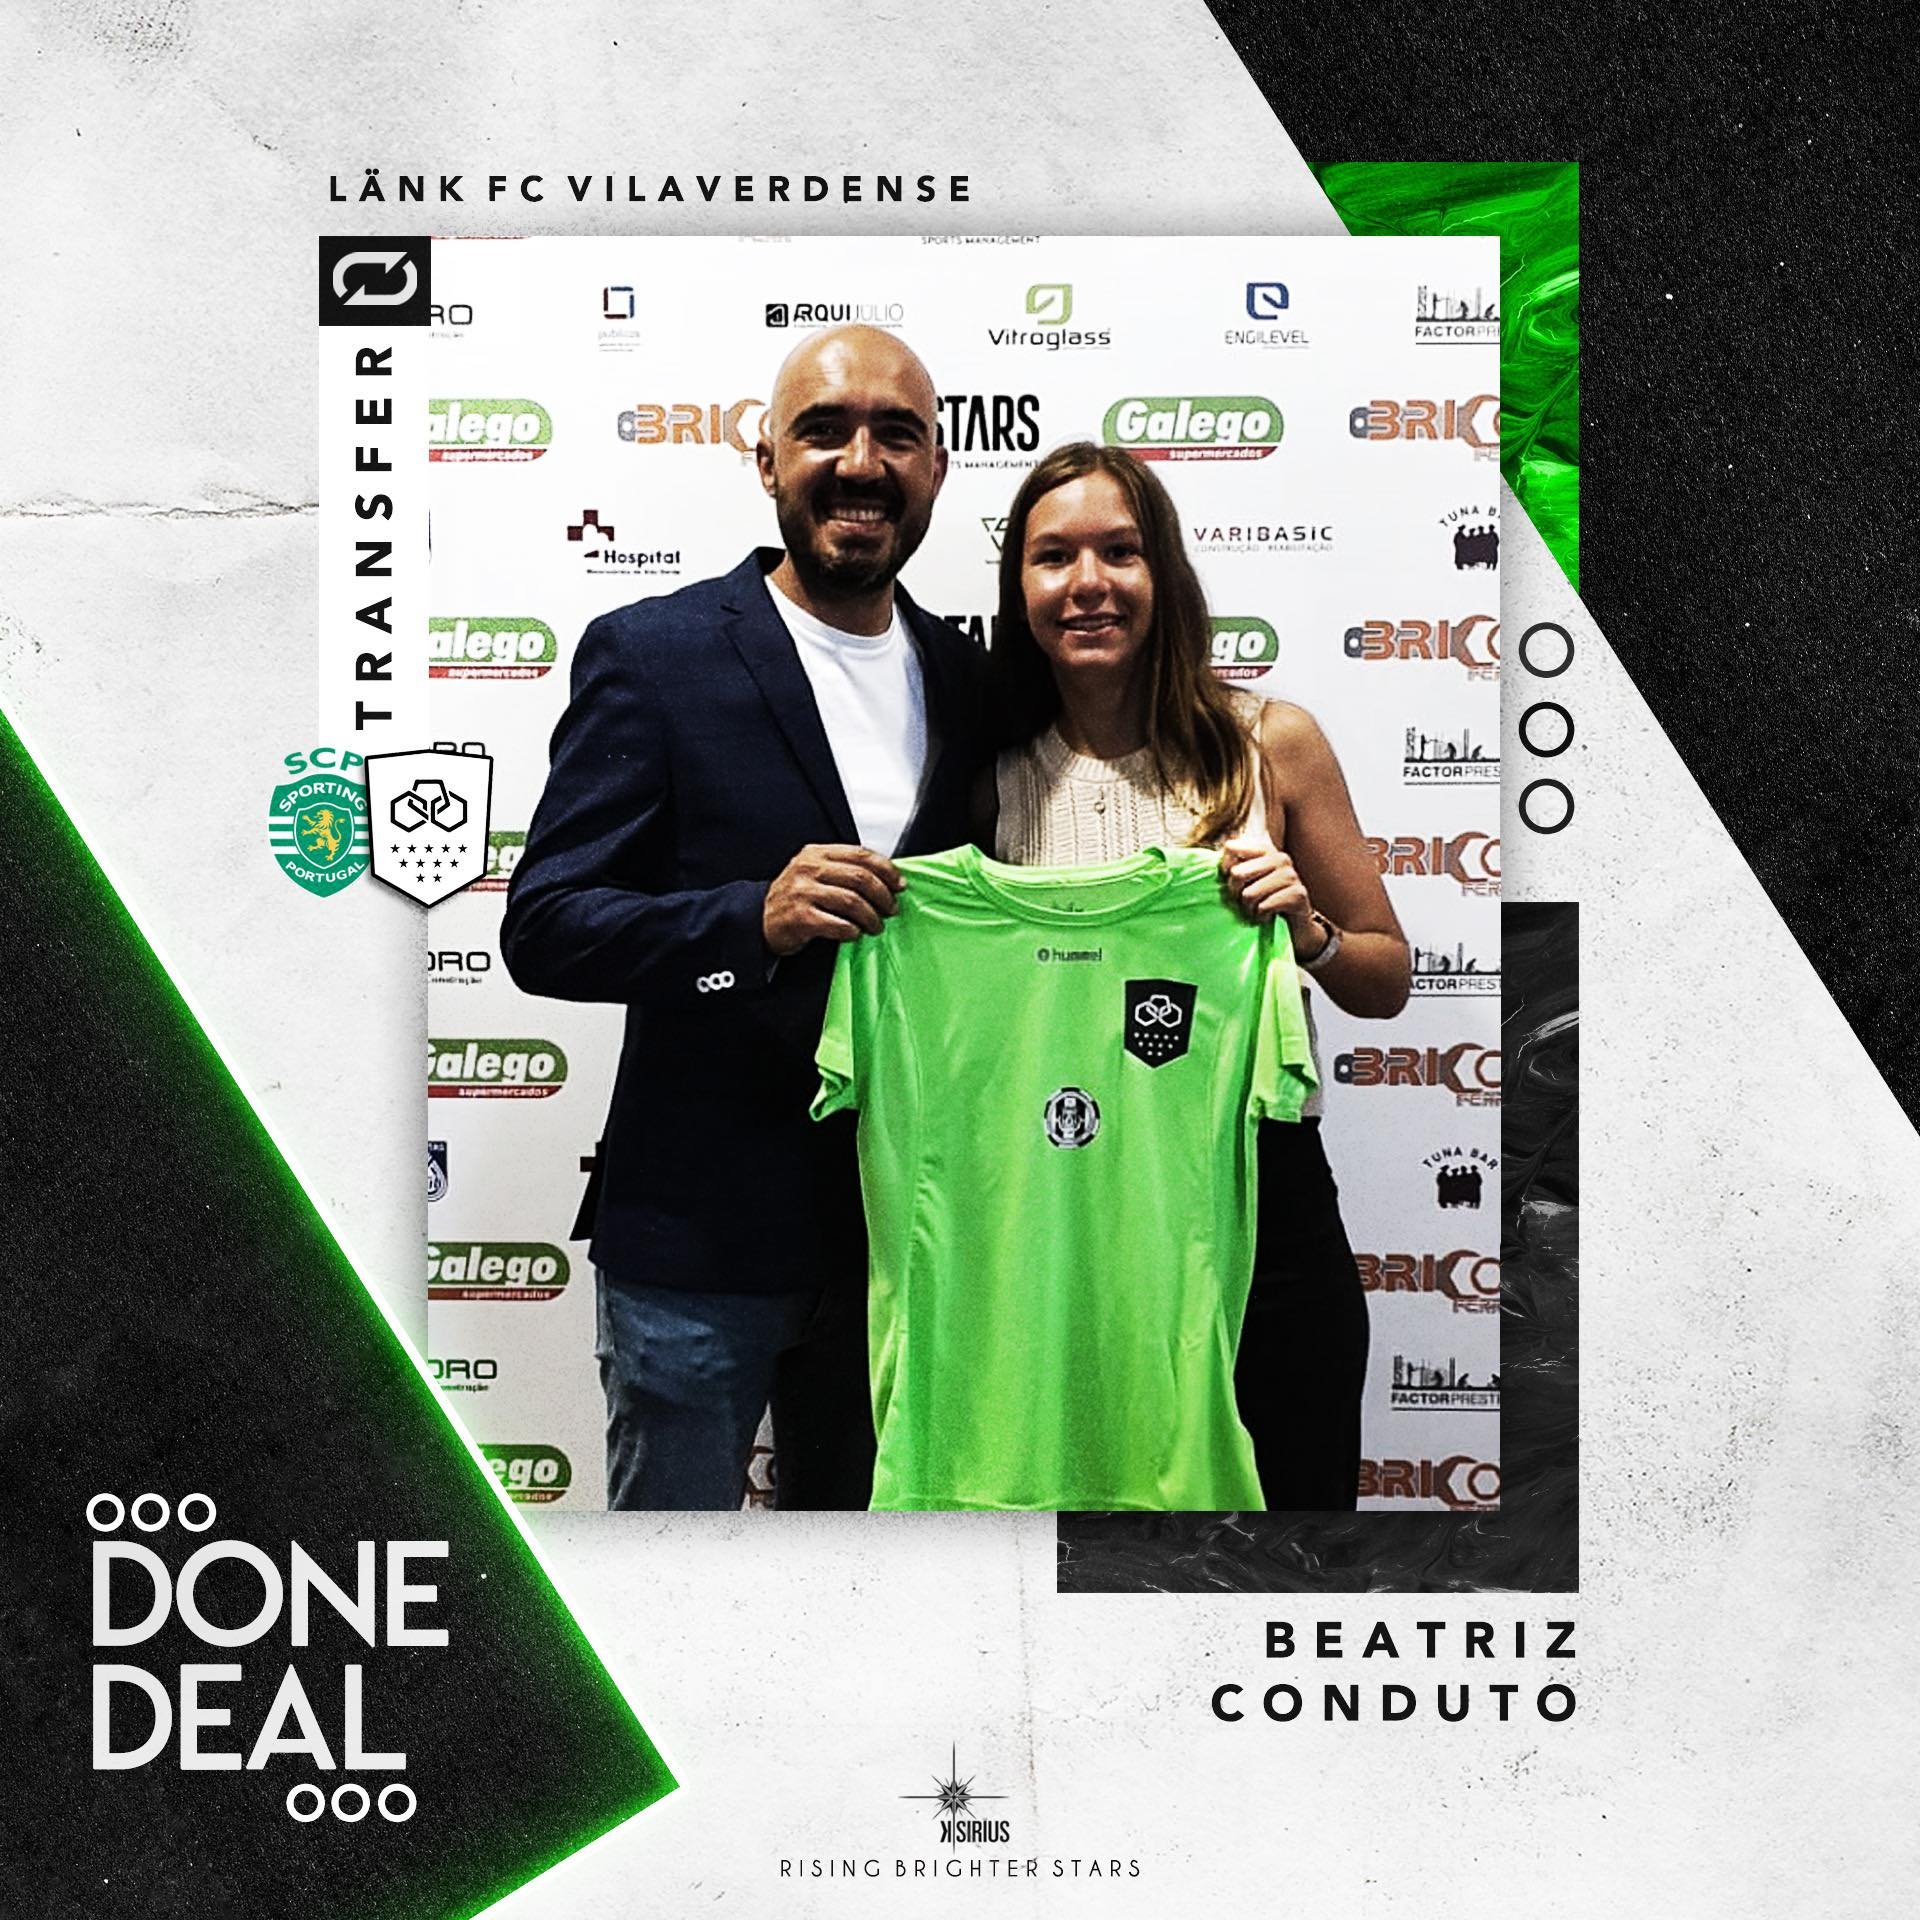 Signing: Beatriz Conduto with Länk F.C. Vilaverdense